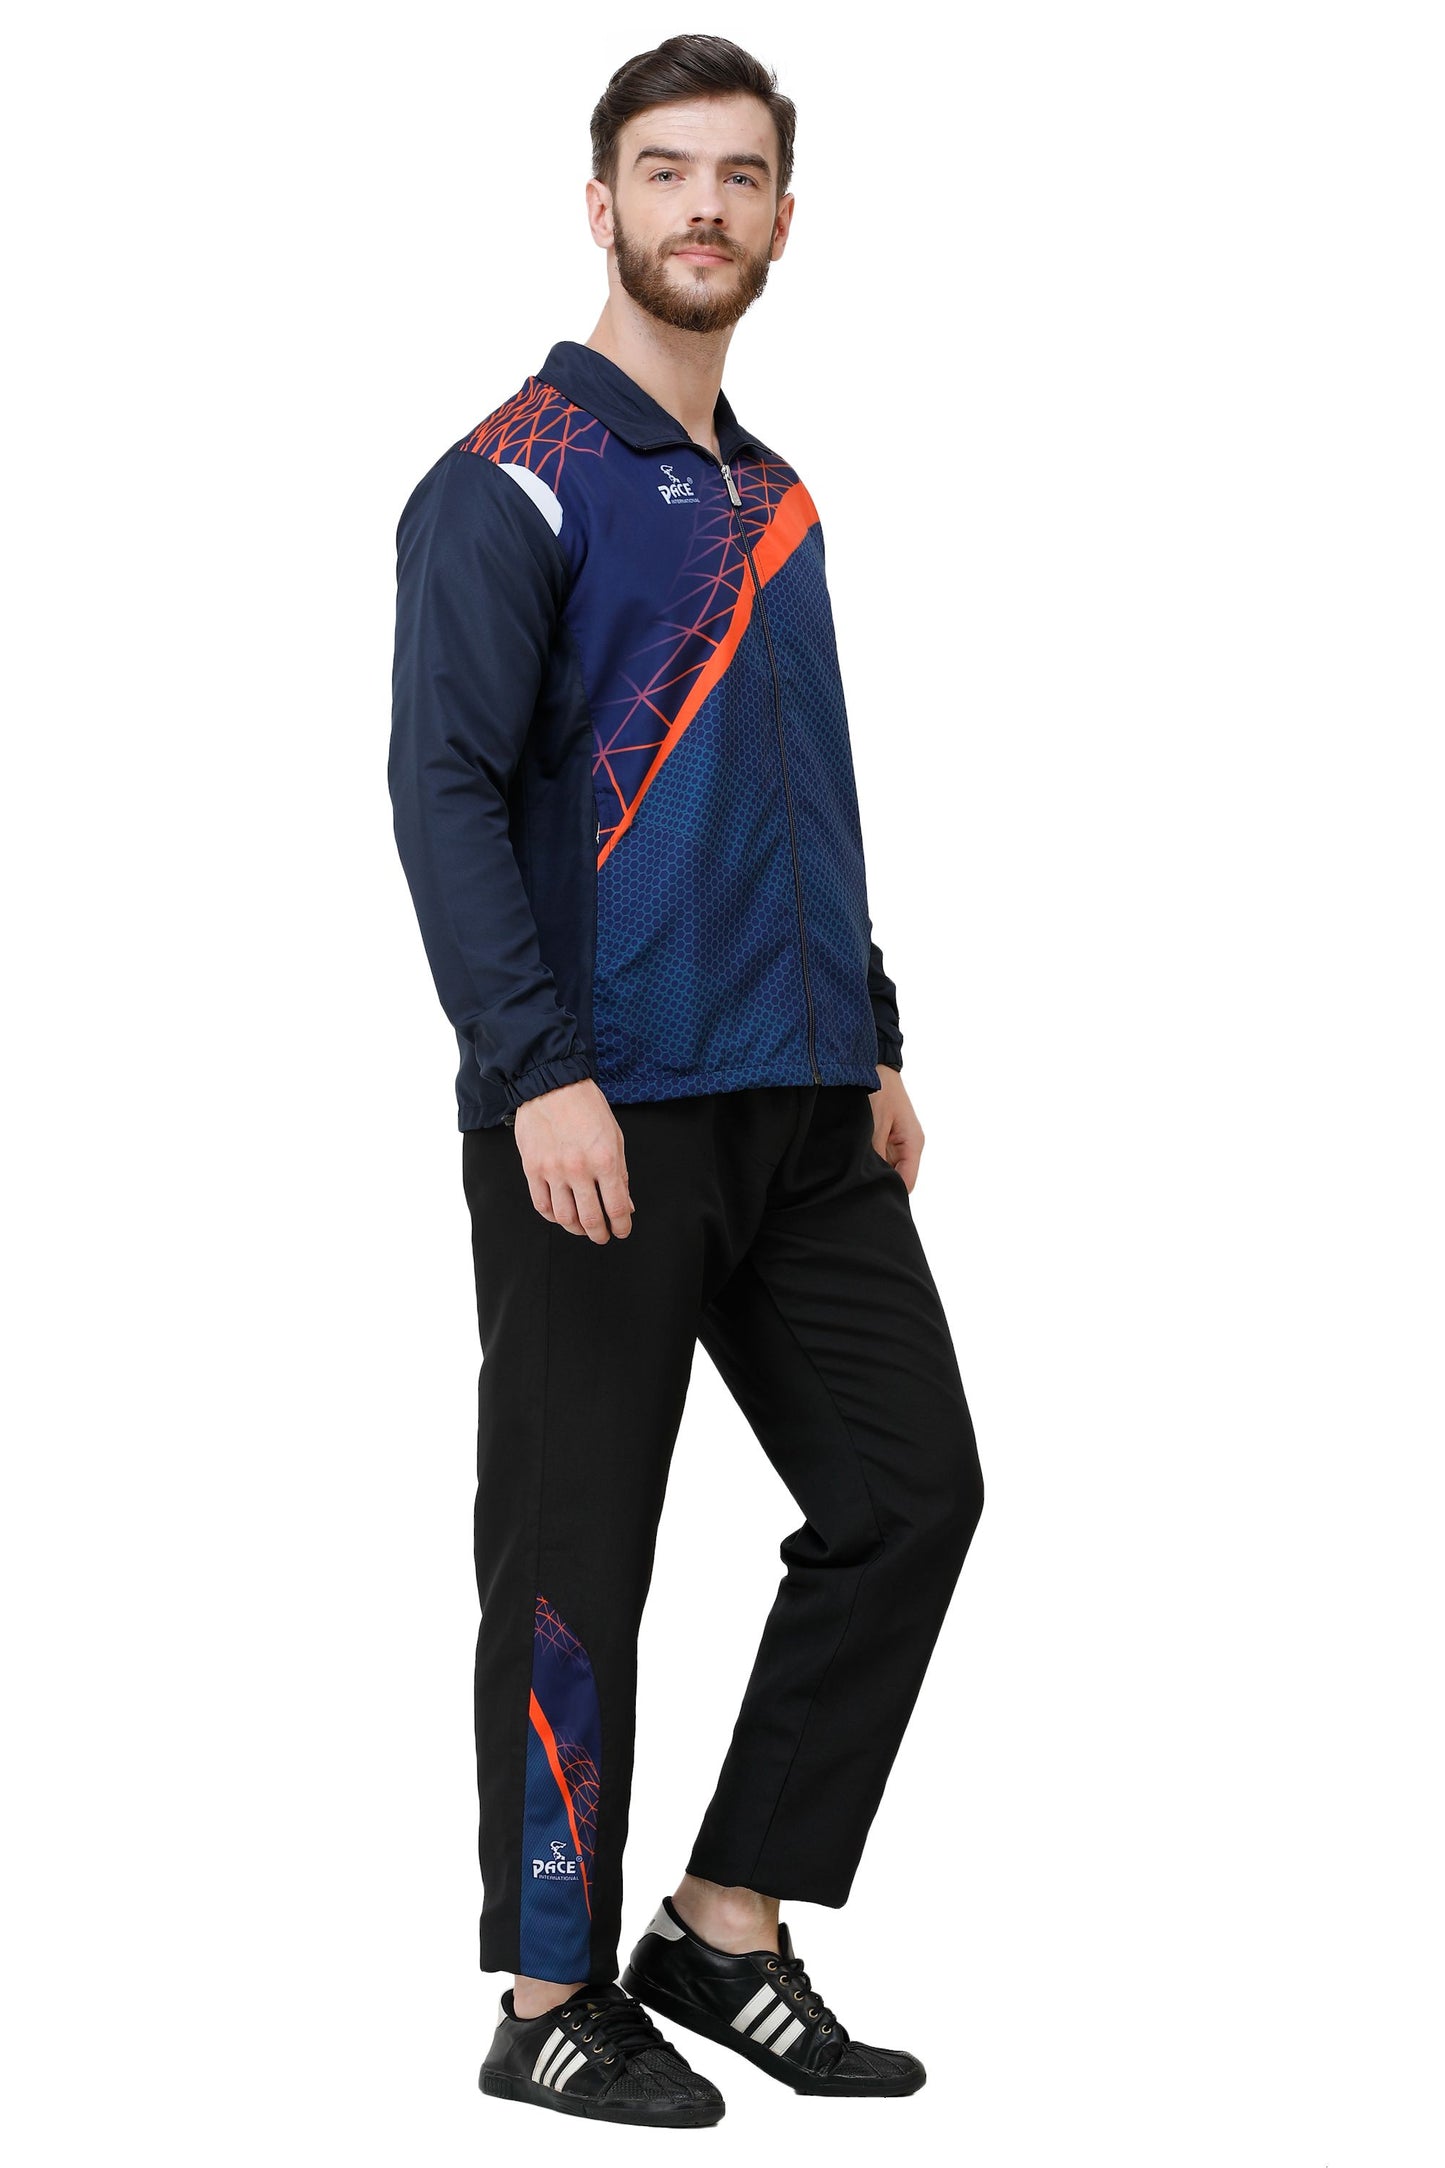 Pace International Men Printed Track Suit (Navy Blue/ Royal)